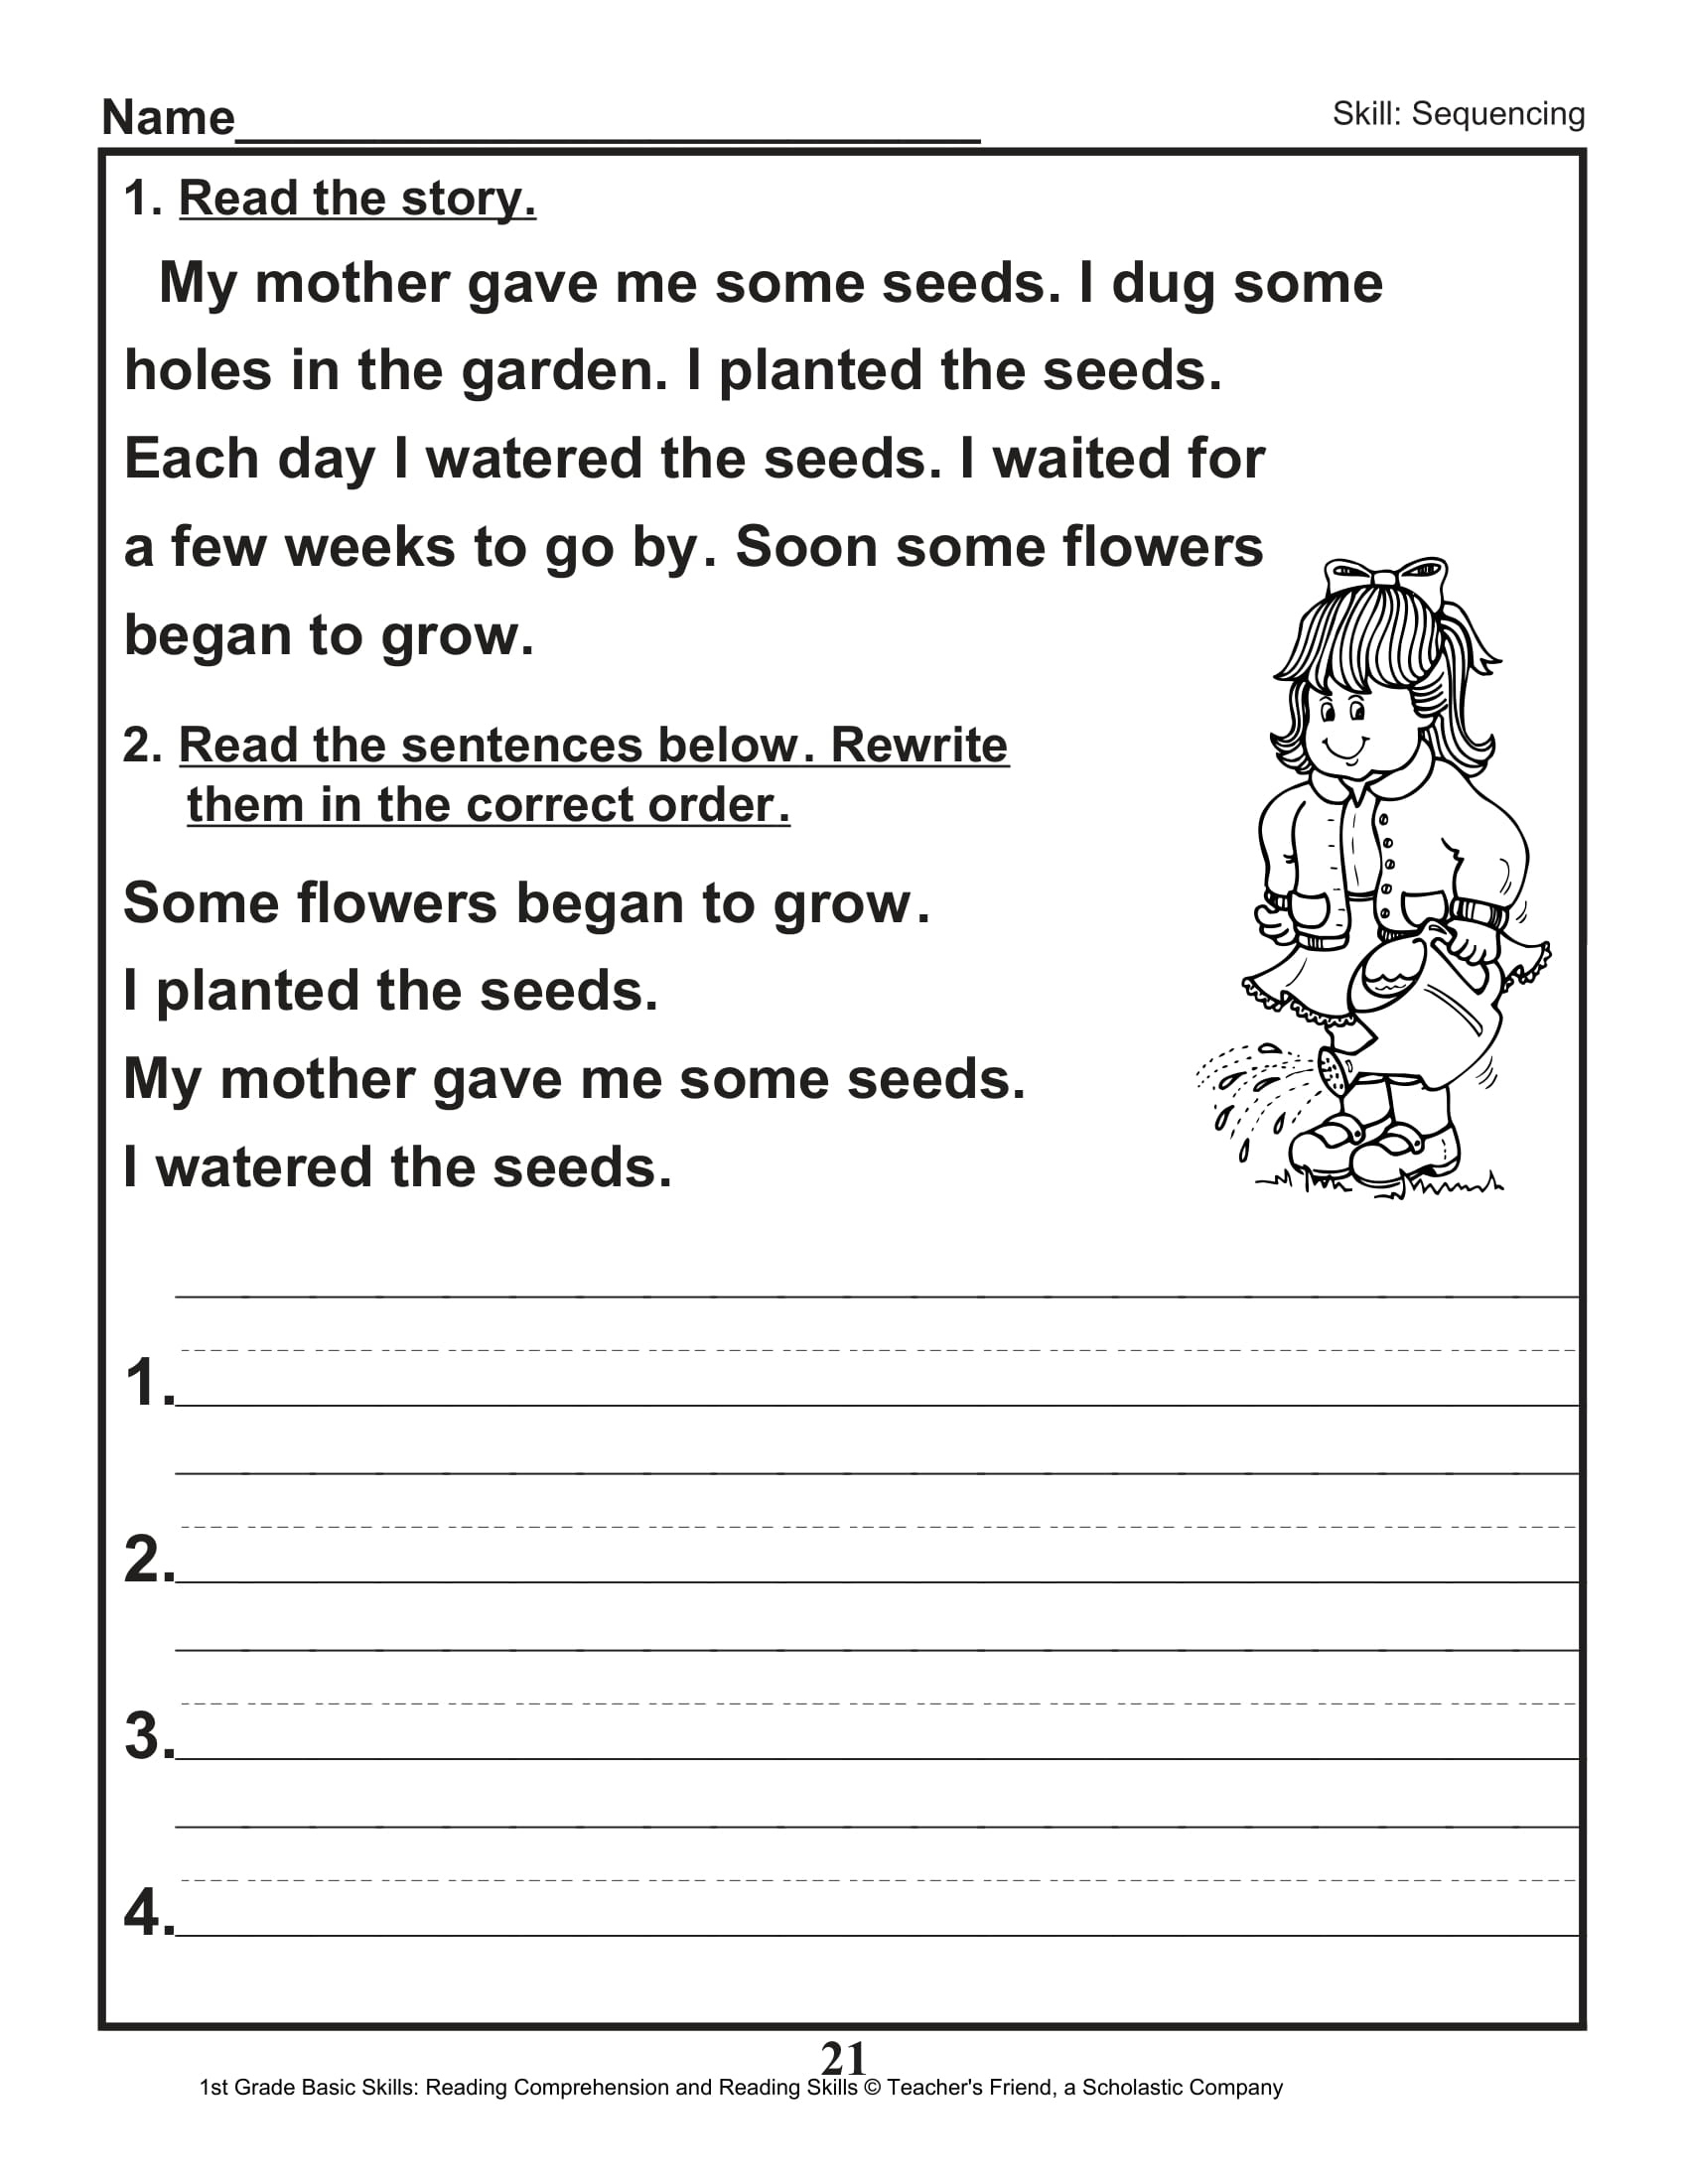 40 Scholastic 1st Grade Reading Comprehension Skills Worksheets 